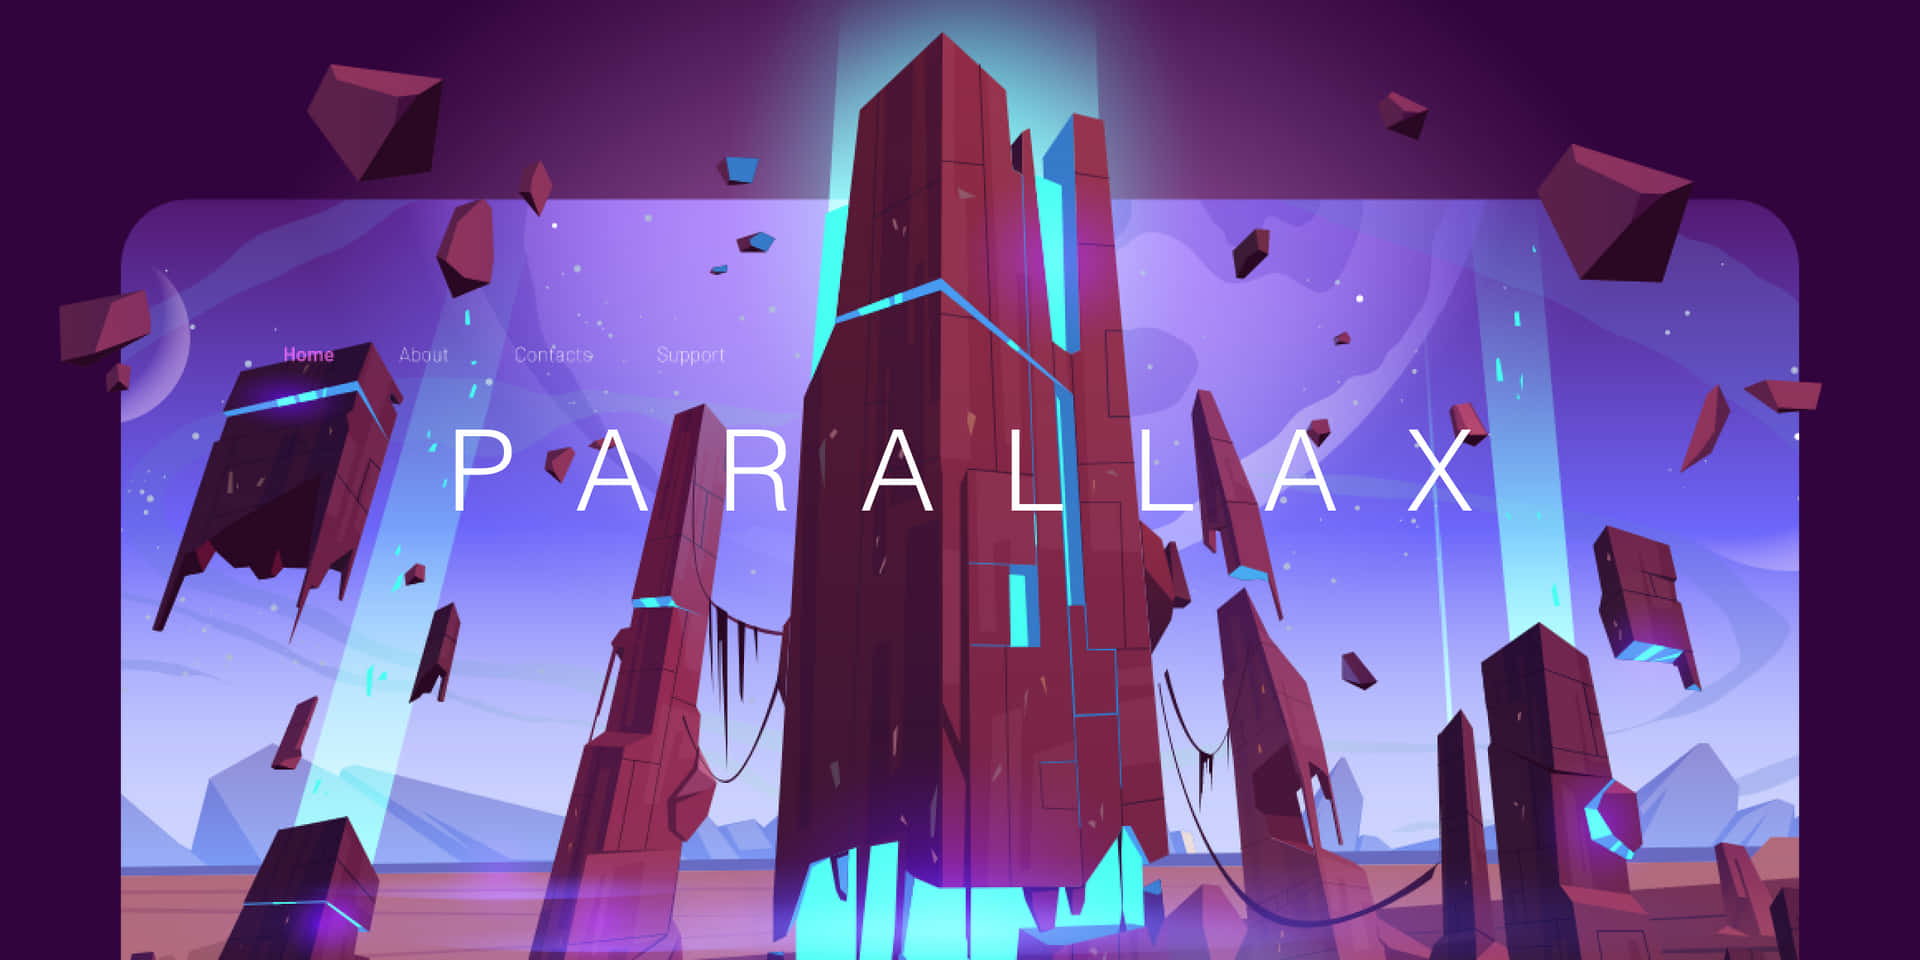 An abstract 3D Parallax background